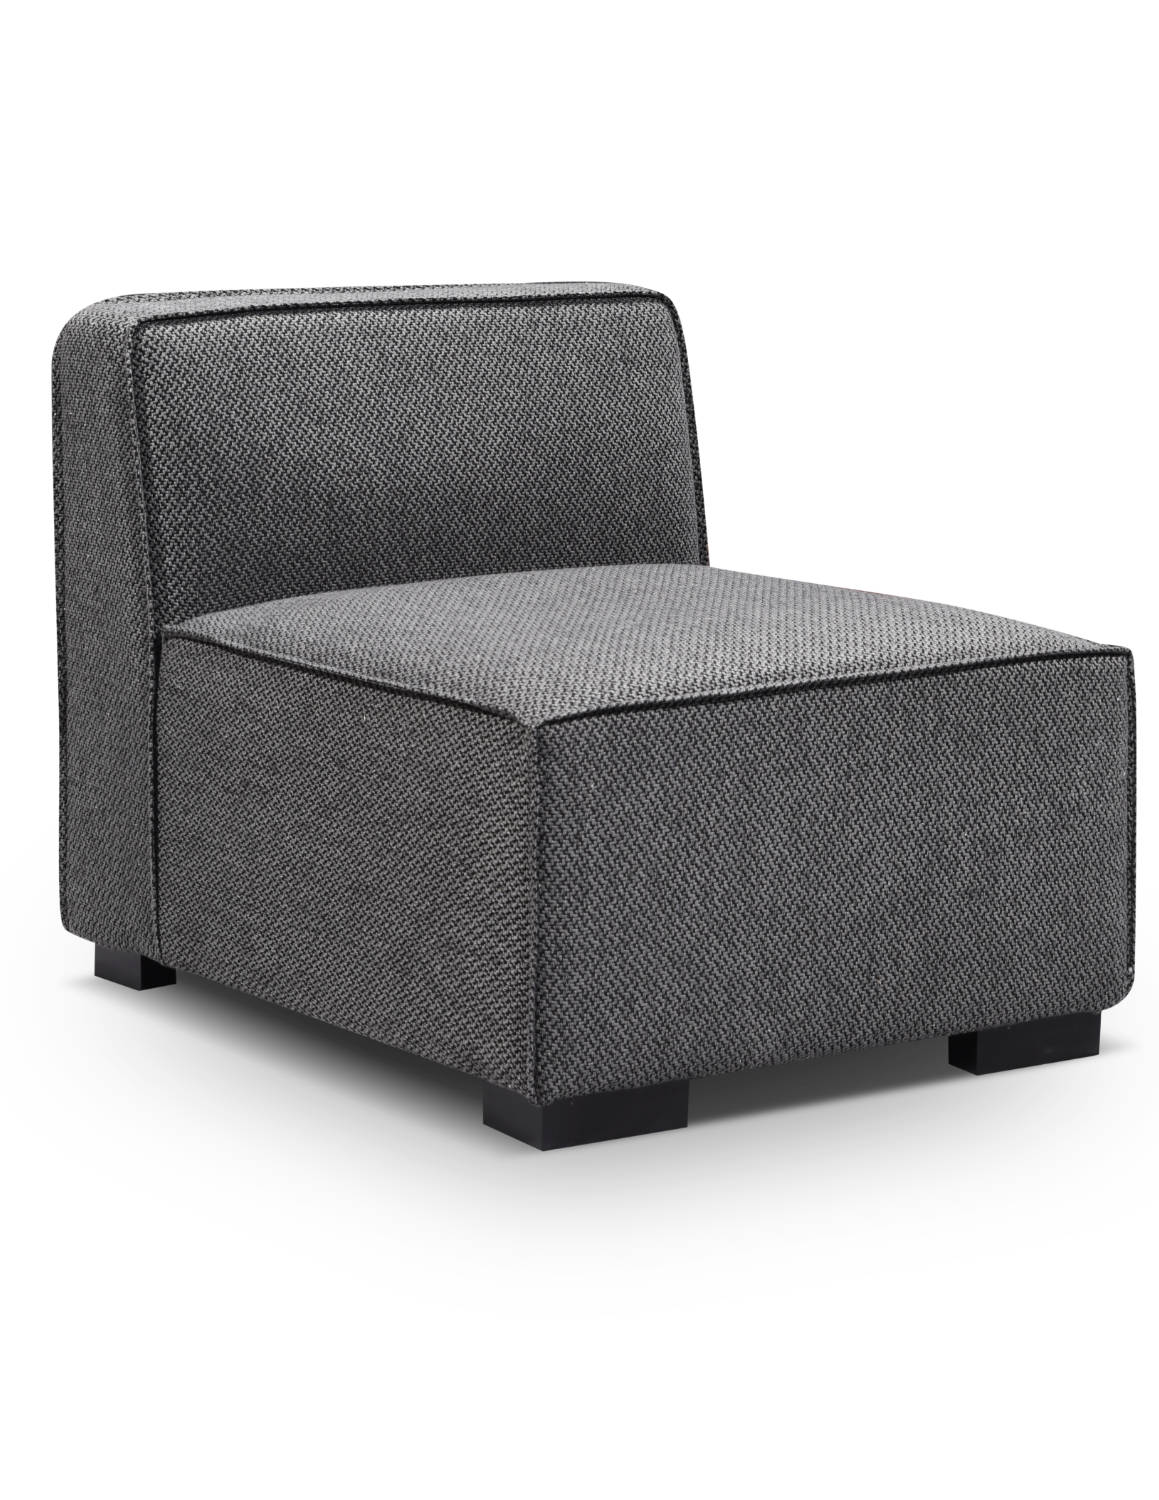 dans Werkelijk Observatie Soft Cube Sofa: Single Seat Module - Expand Furniture - Folding Tables,  Smarter Wall Beds, Space Savers